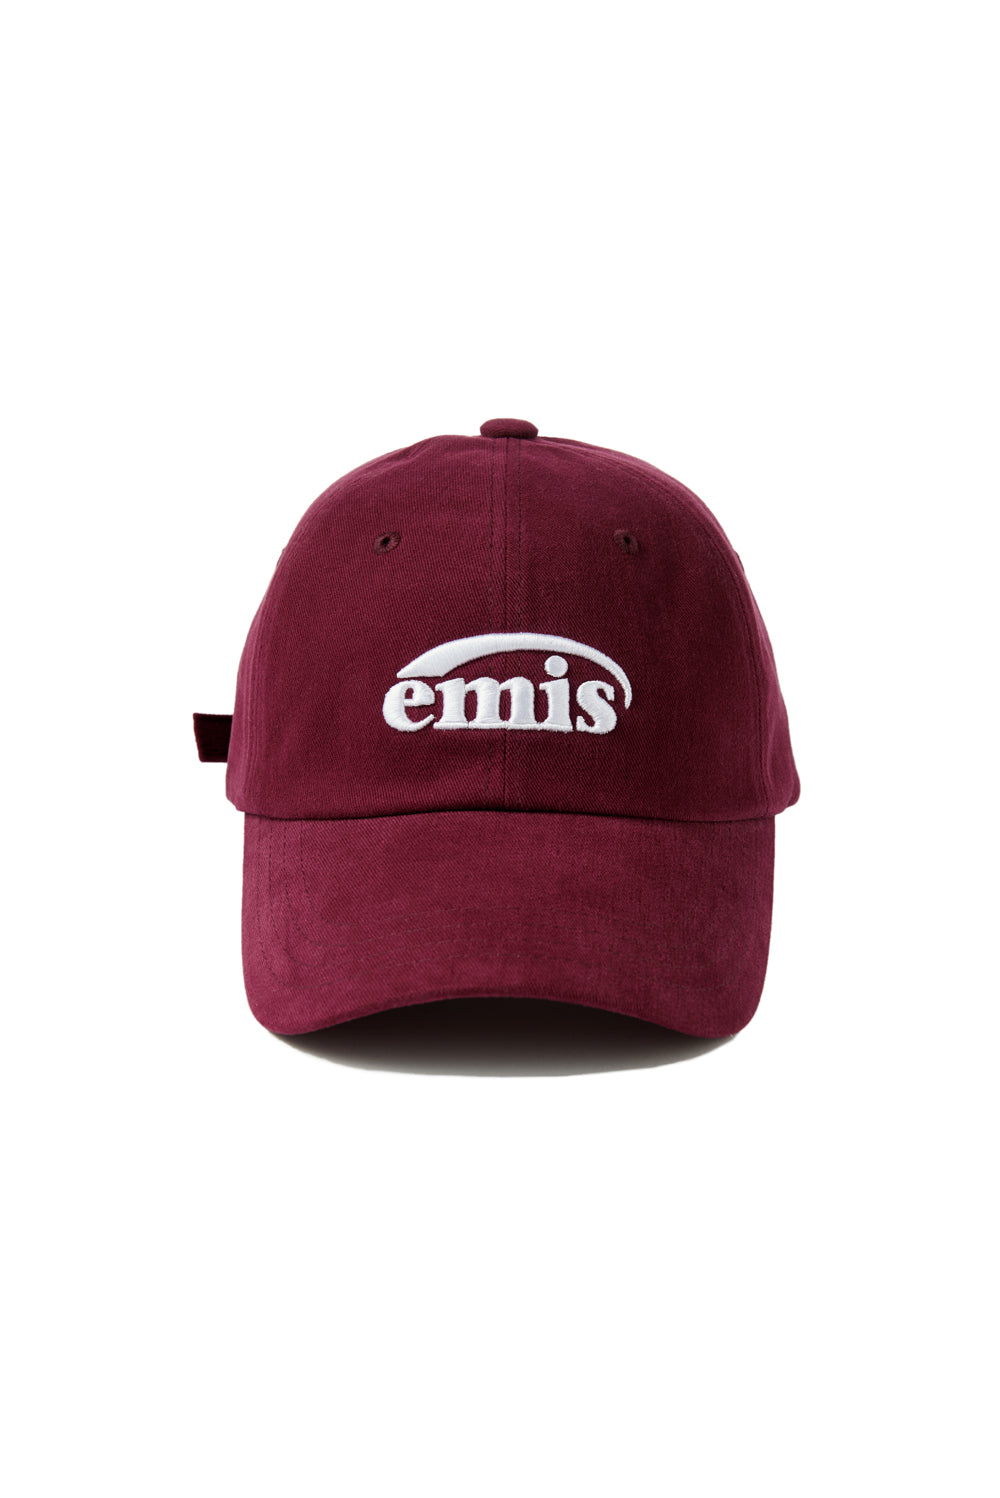 New Logo Emis Cap - Burgundy